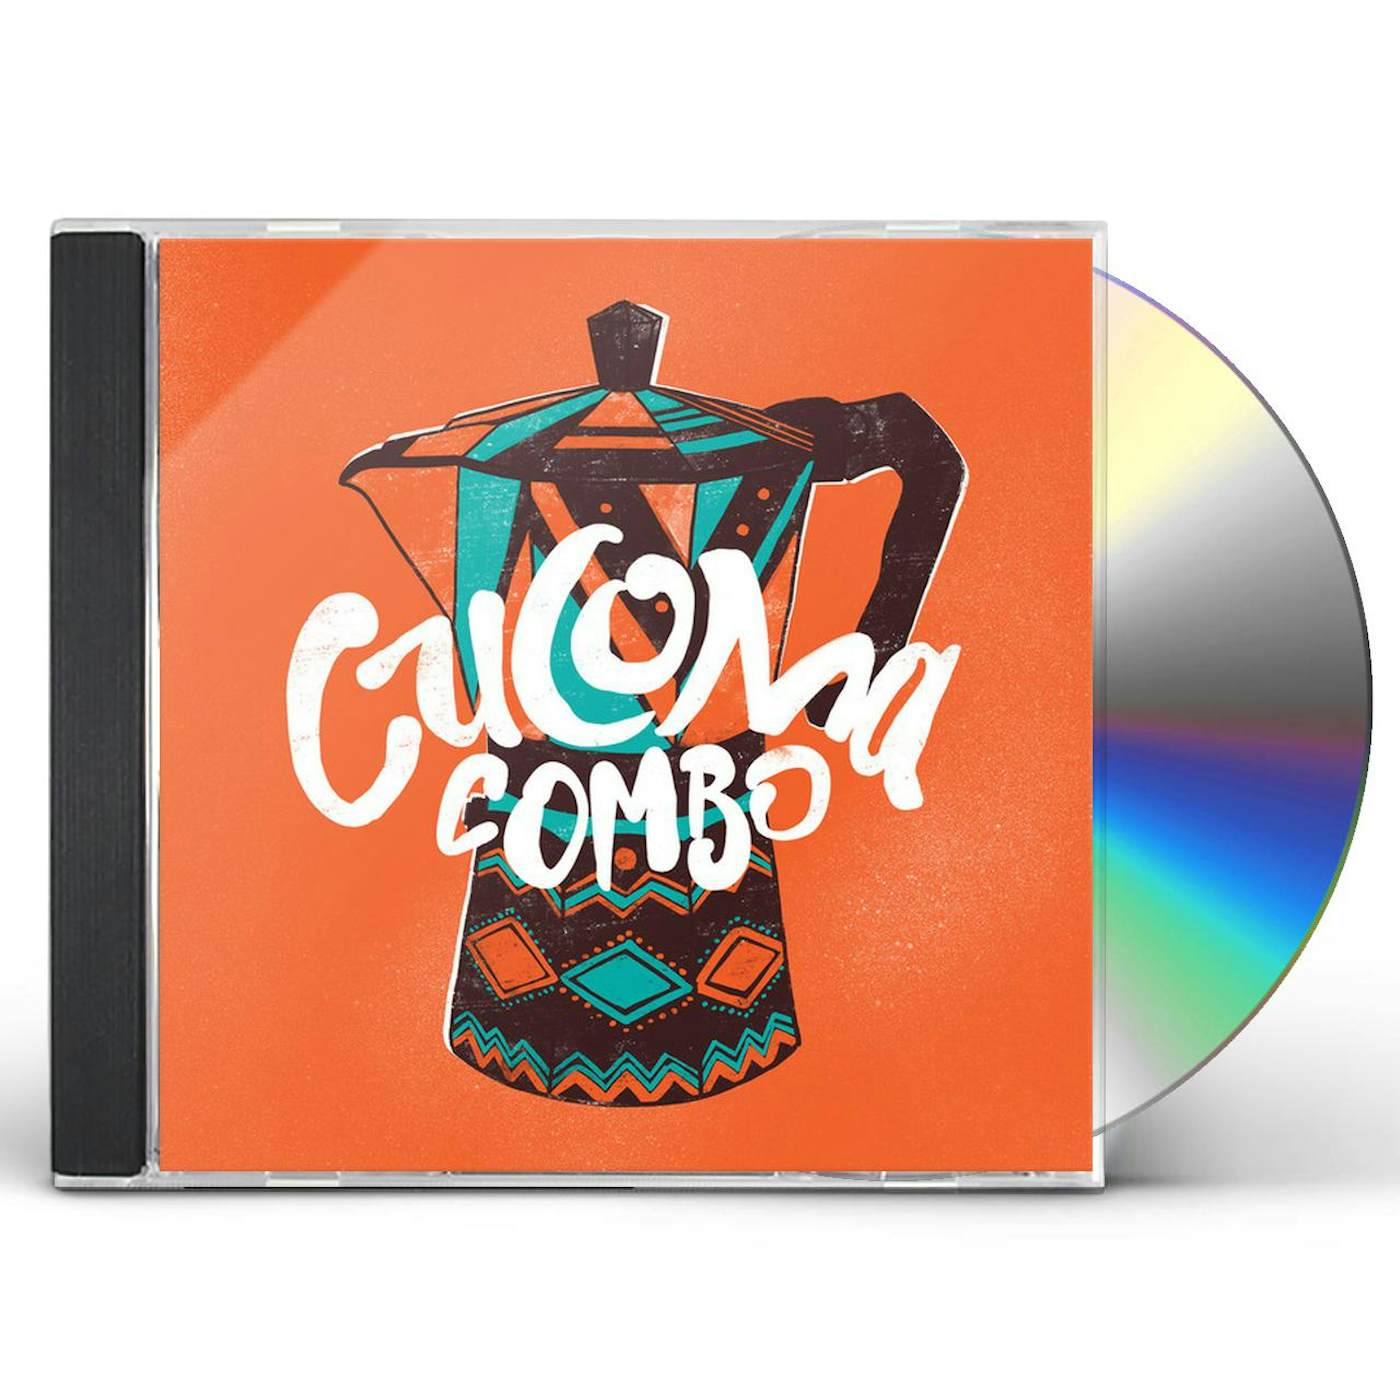 CUCOMA COMBO CD